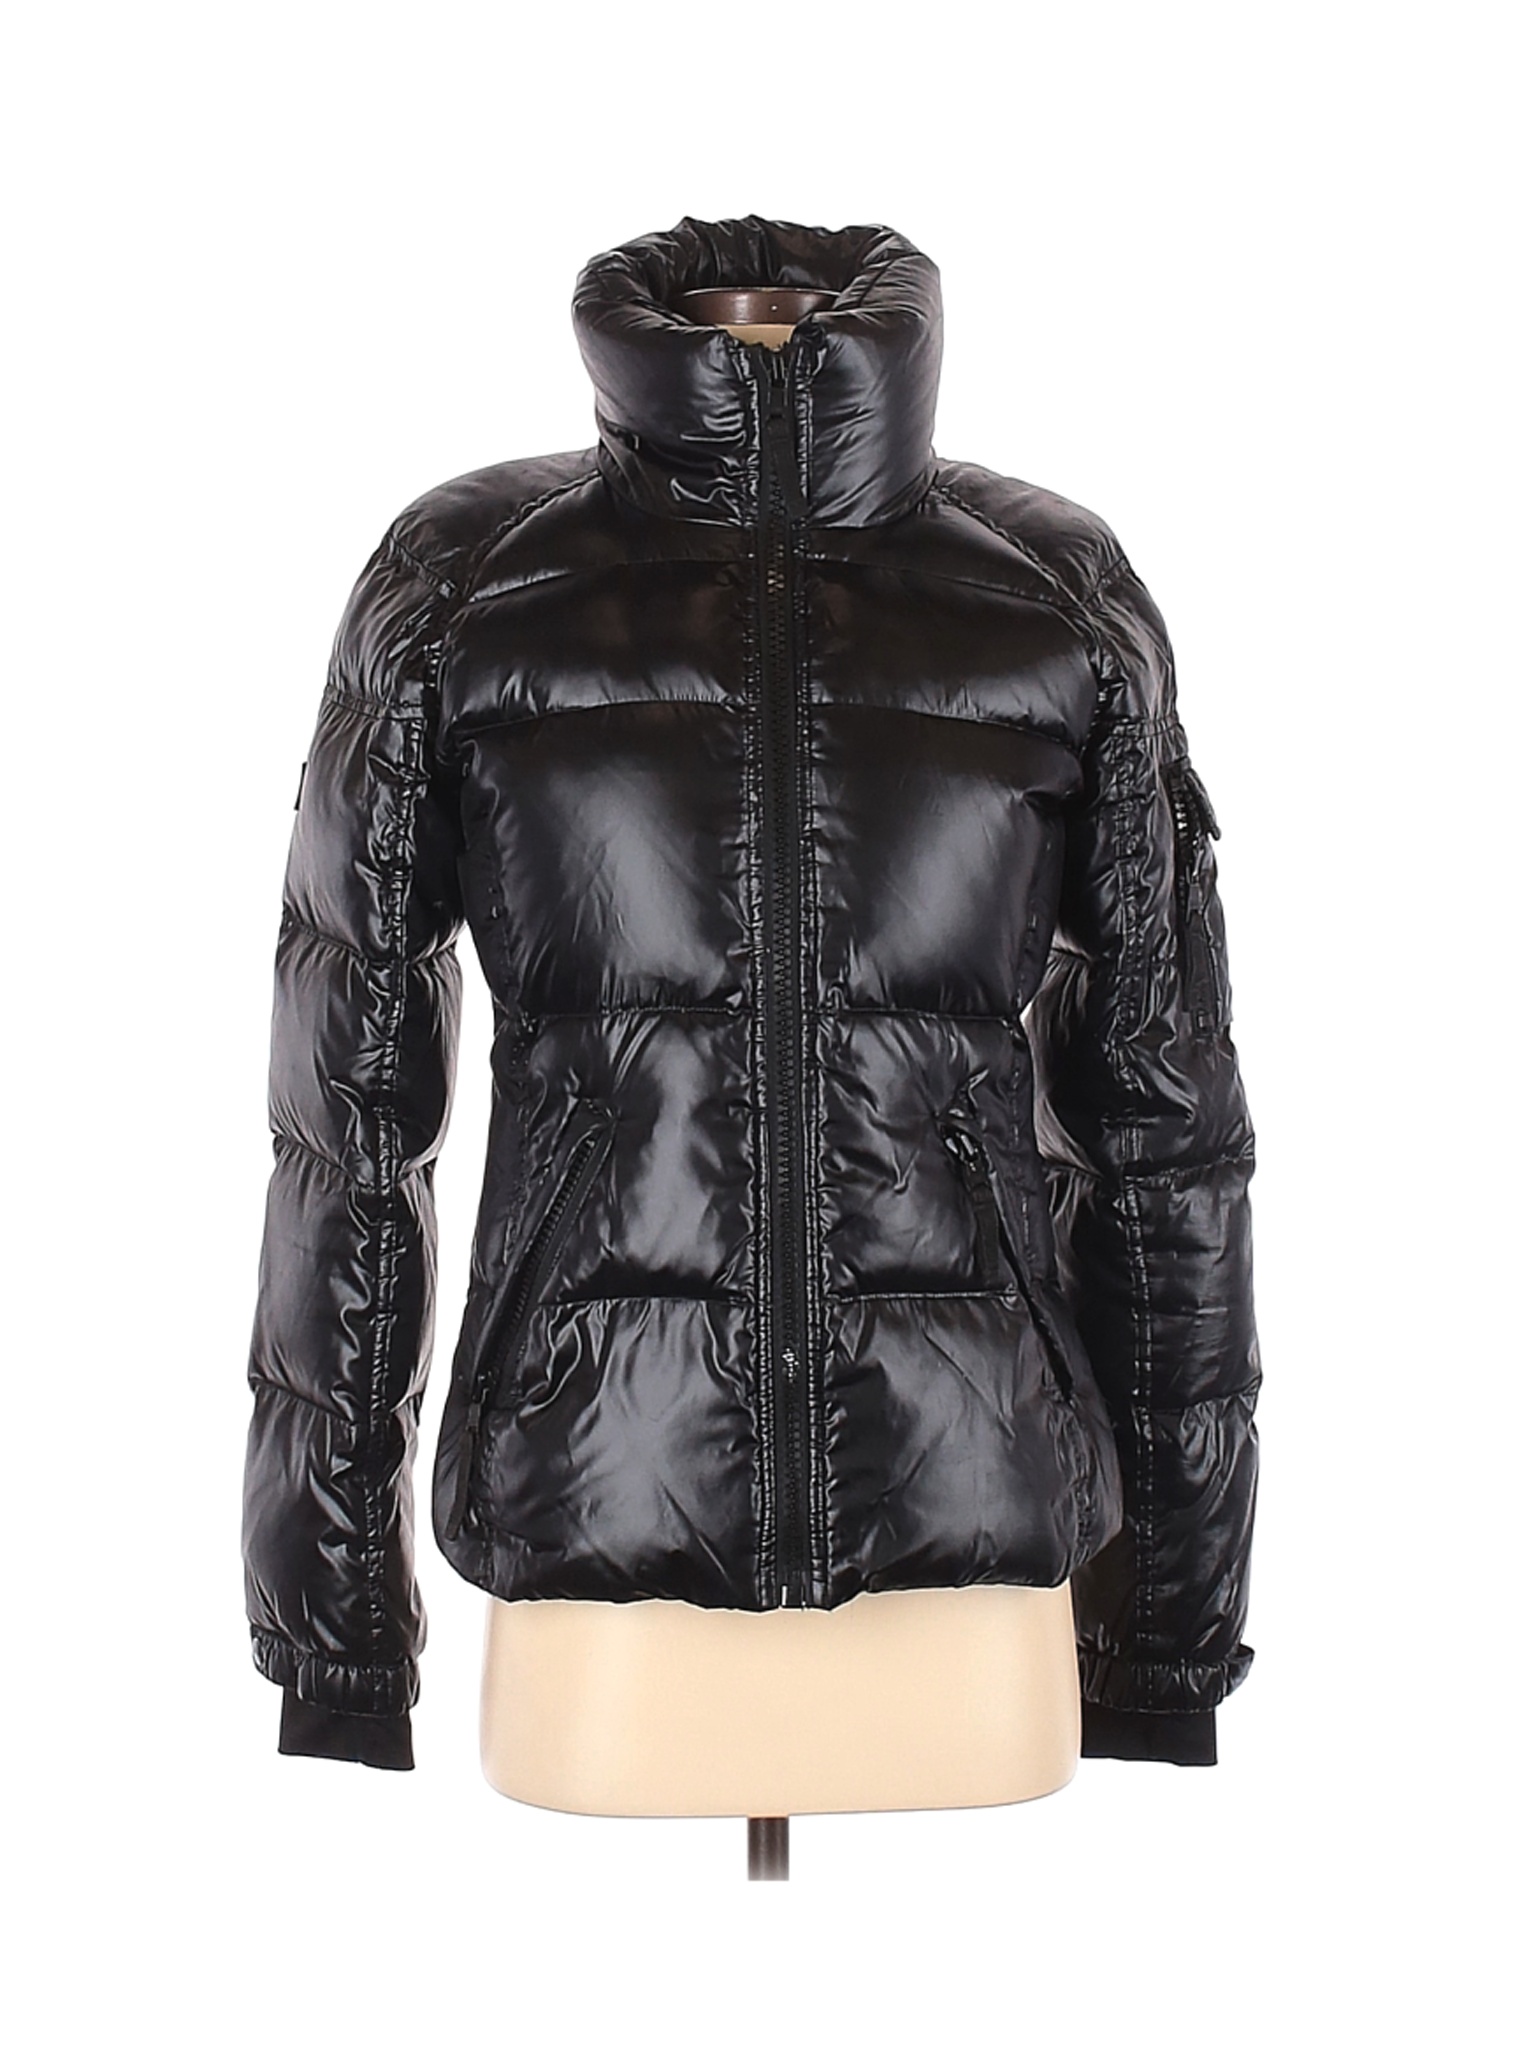 SAM. Women Black Coat S | eBay